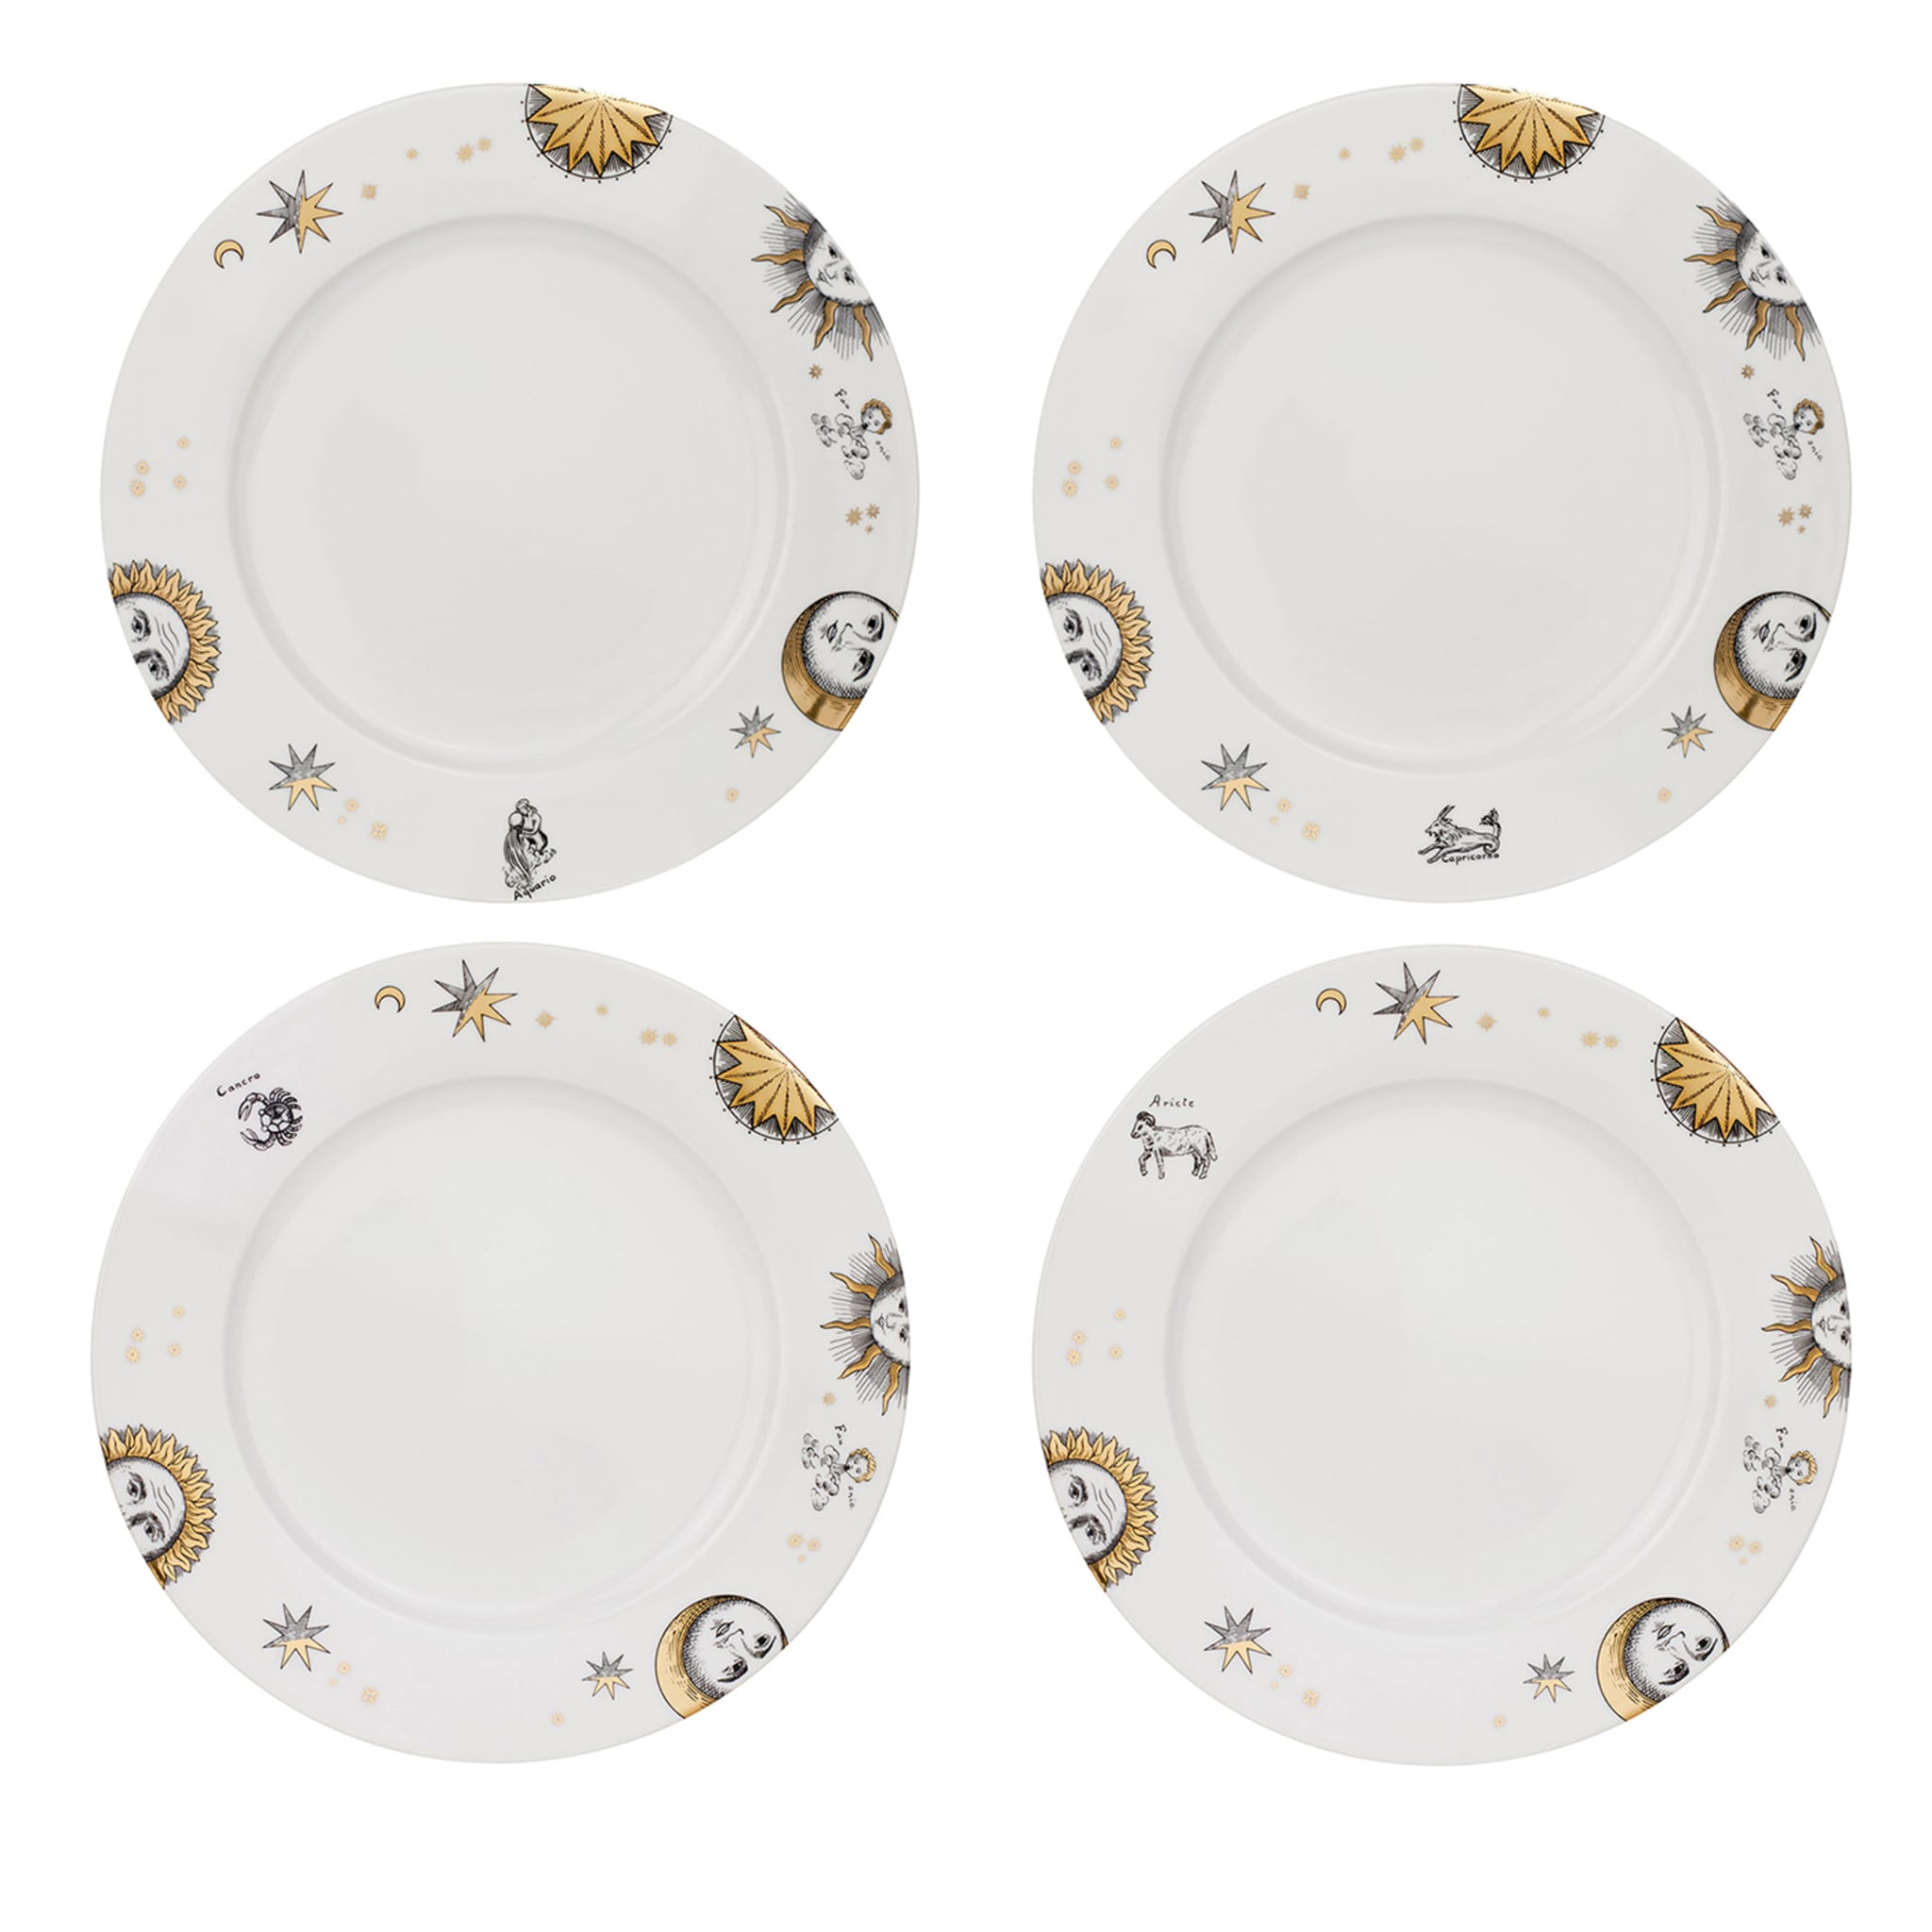 Set of 12 Astronomici Dinner Plates - Alternative view 3